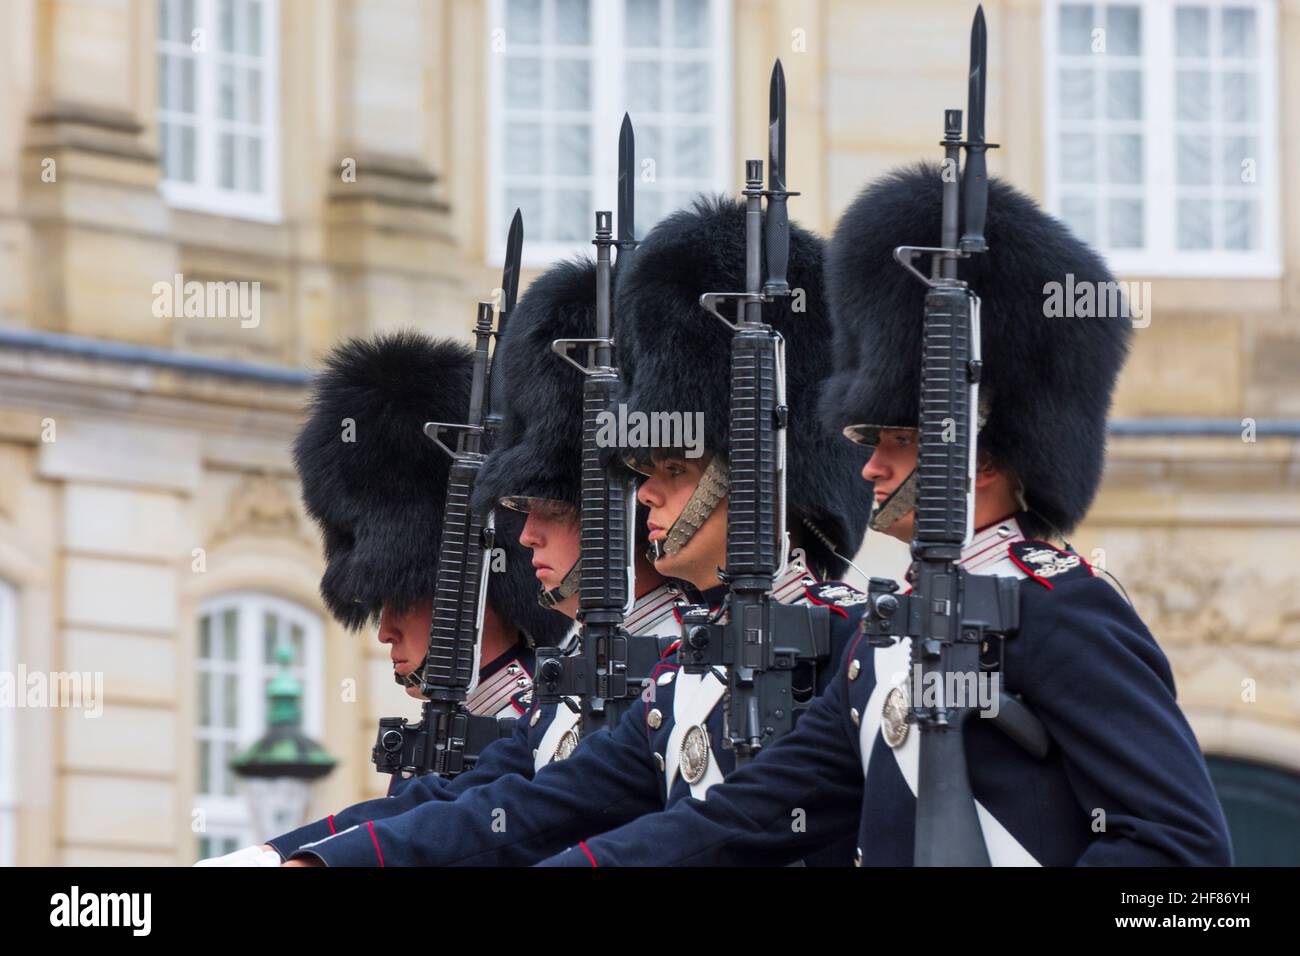 Copenhagen,  Koebenhavn,  Royal Guard,  changing of the guard in front of Amalienborg Palace,  M16 rifle in Zealand,  Sealand,  Sjaelland,  Denmark Stock Photo